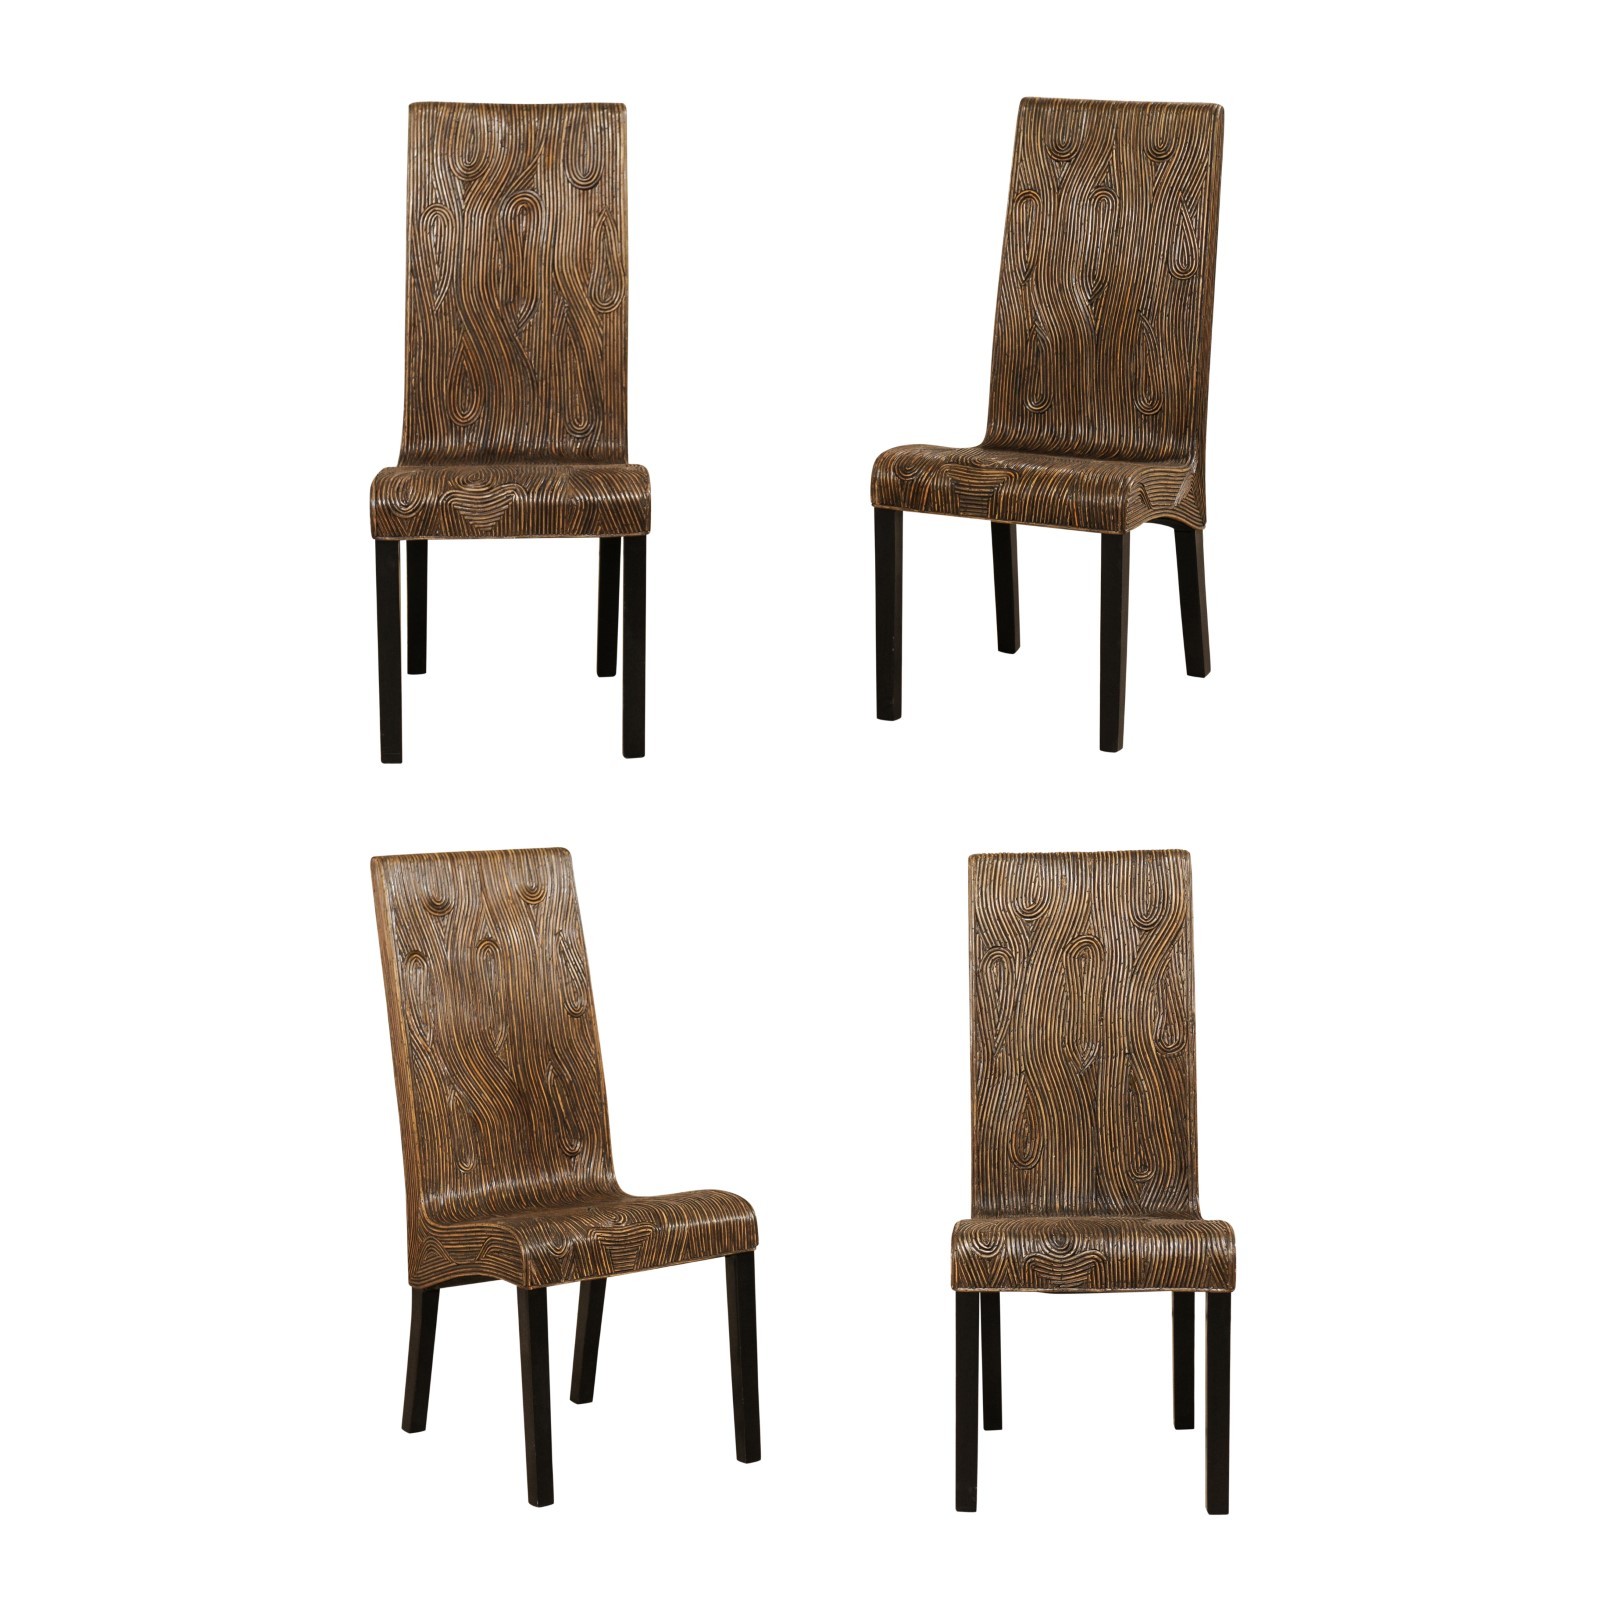 Italian Set of 4 Bent Reed Modern Chairs